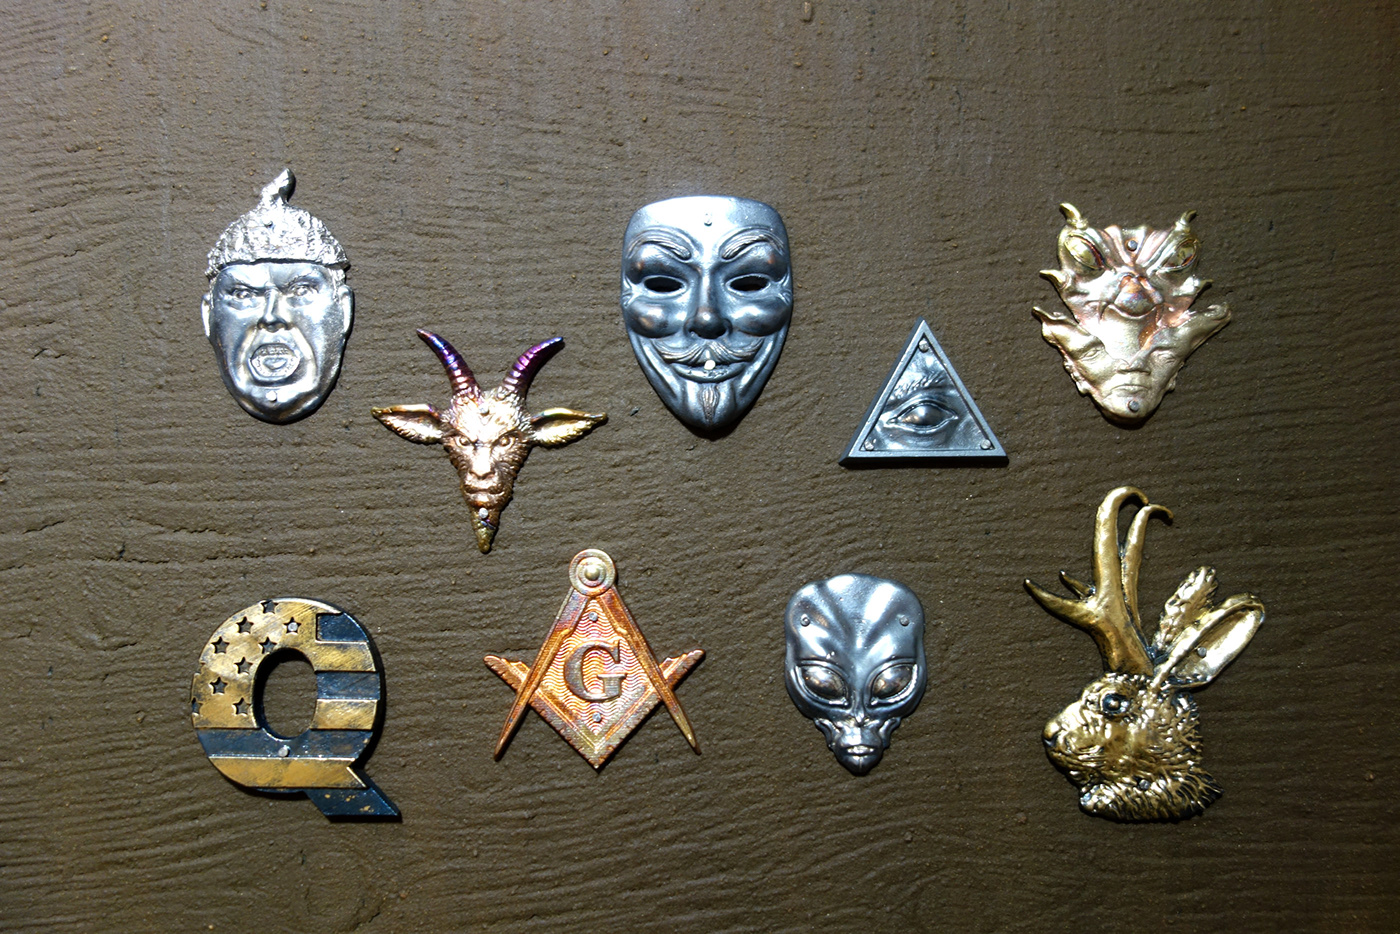 anonymous Baphomet grey alien guy fawkes jackalope masonic pendants qanon reptilian silver jewelry